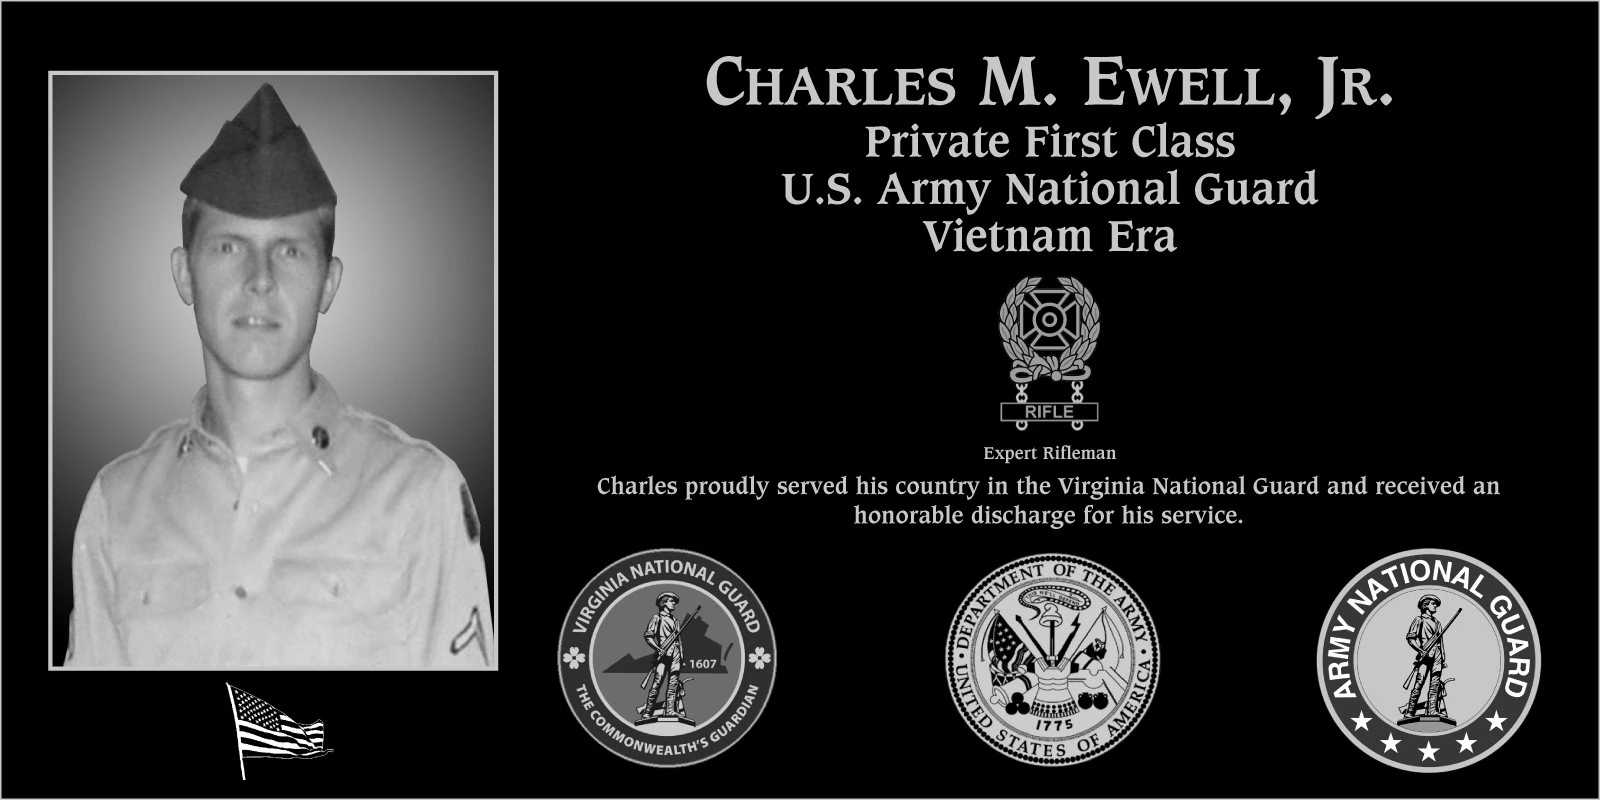 Charles M. Ewell, jr